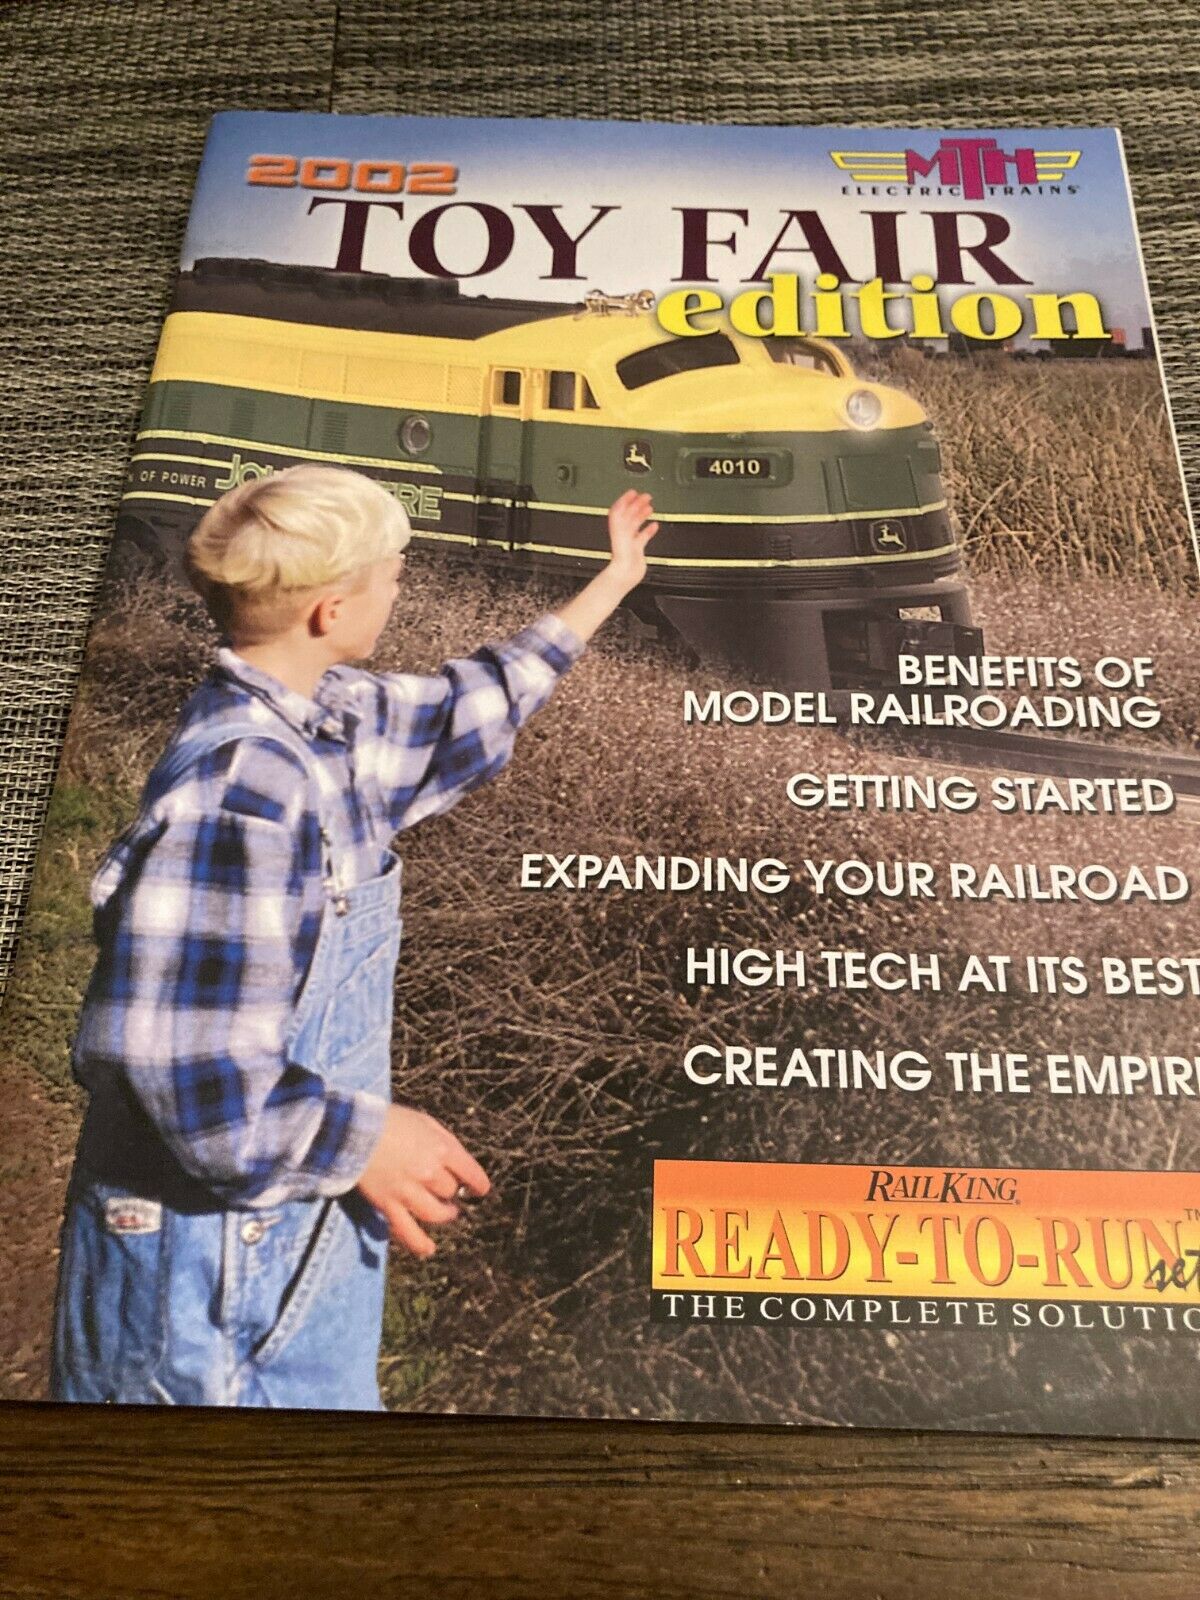 Mth Electric Trains 2002 Toy Fair Edition, Railking